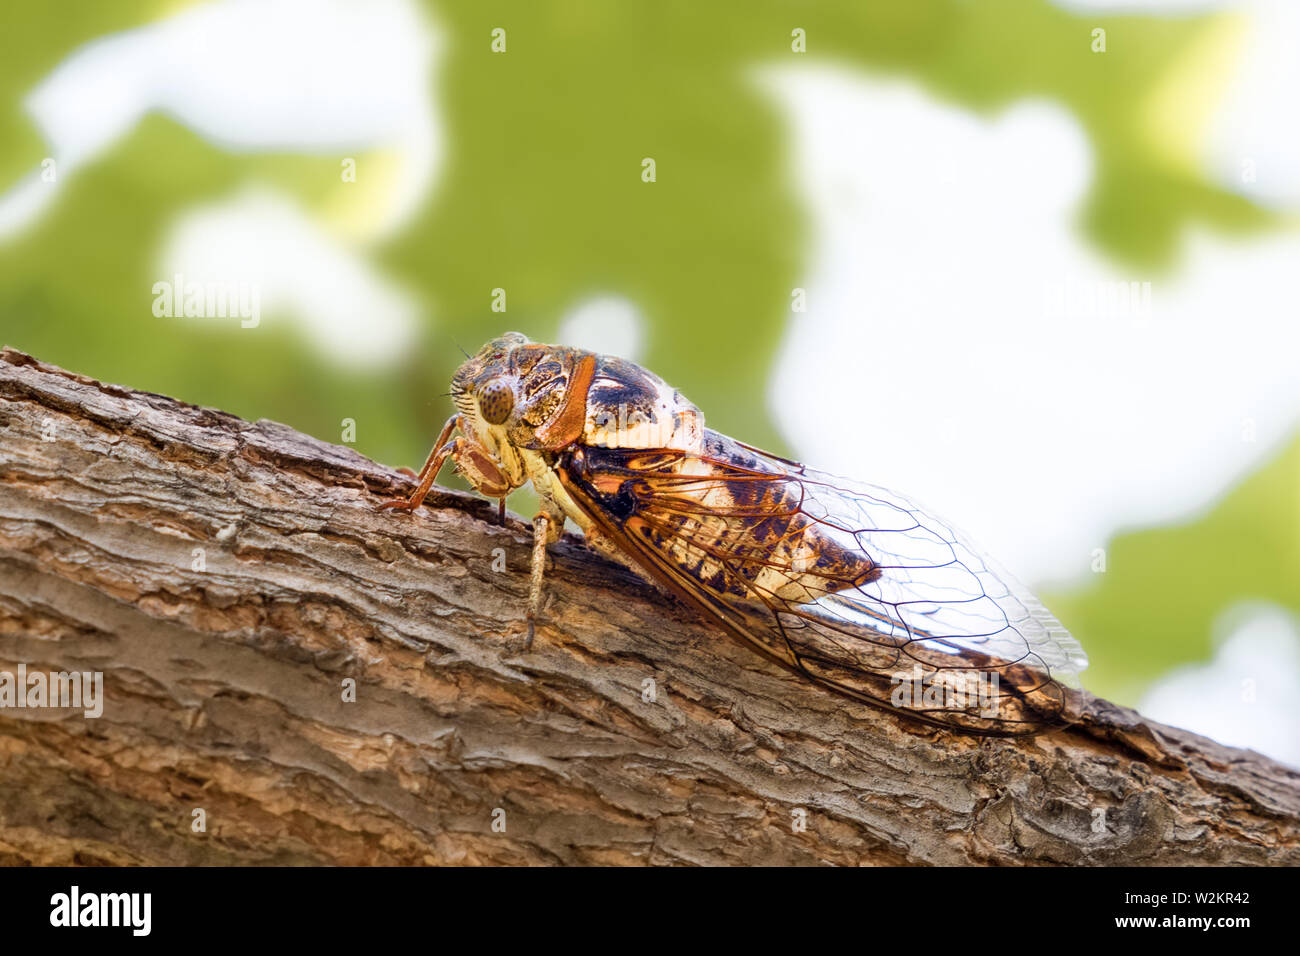 Cicadidae insect. Singing cicada. Cicadoidea insect. Eukaryota Animalia Arthropoda Tracheata Hexapoda Insecta Insecta biology. Traveling concept Stock Photo